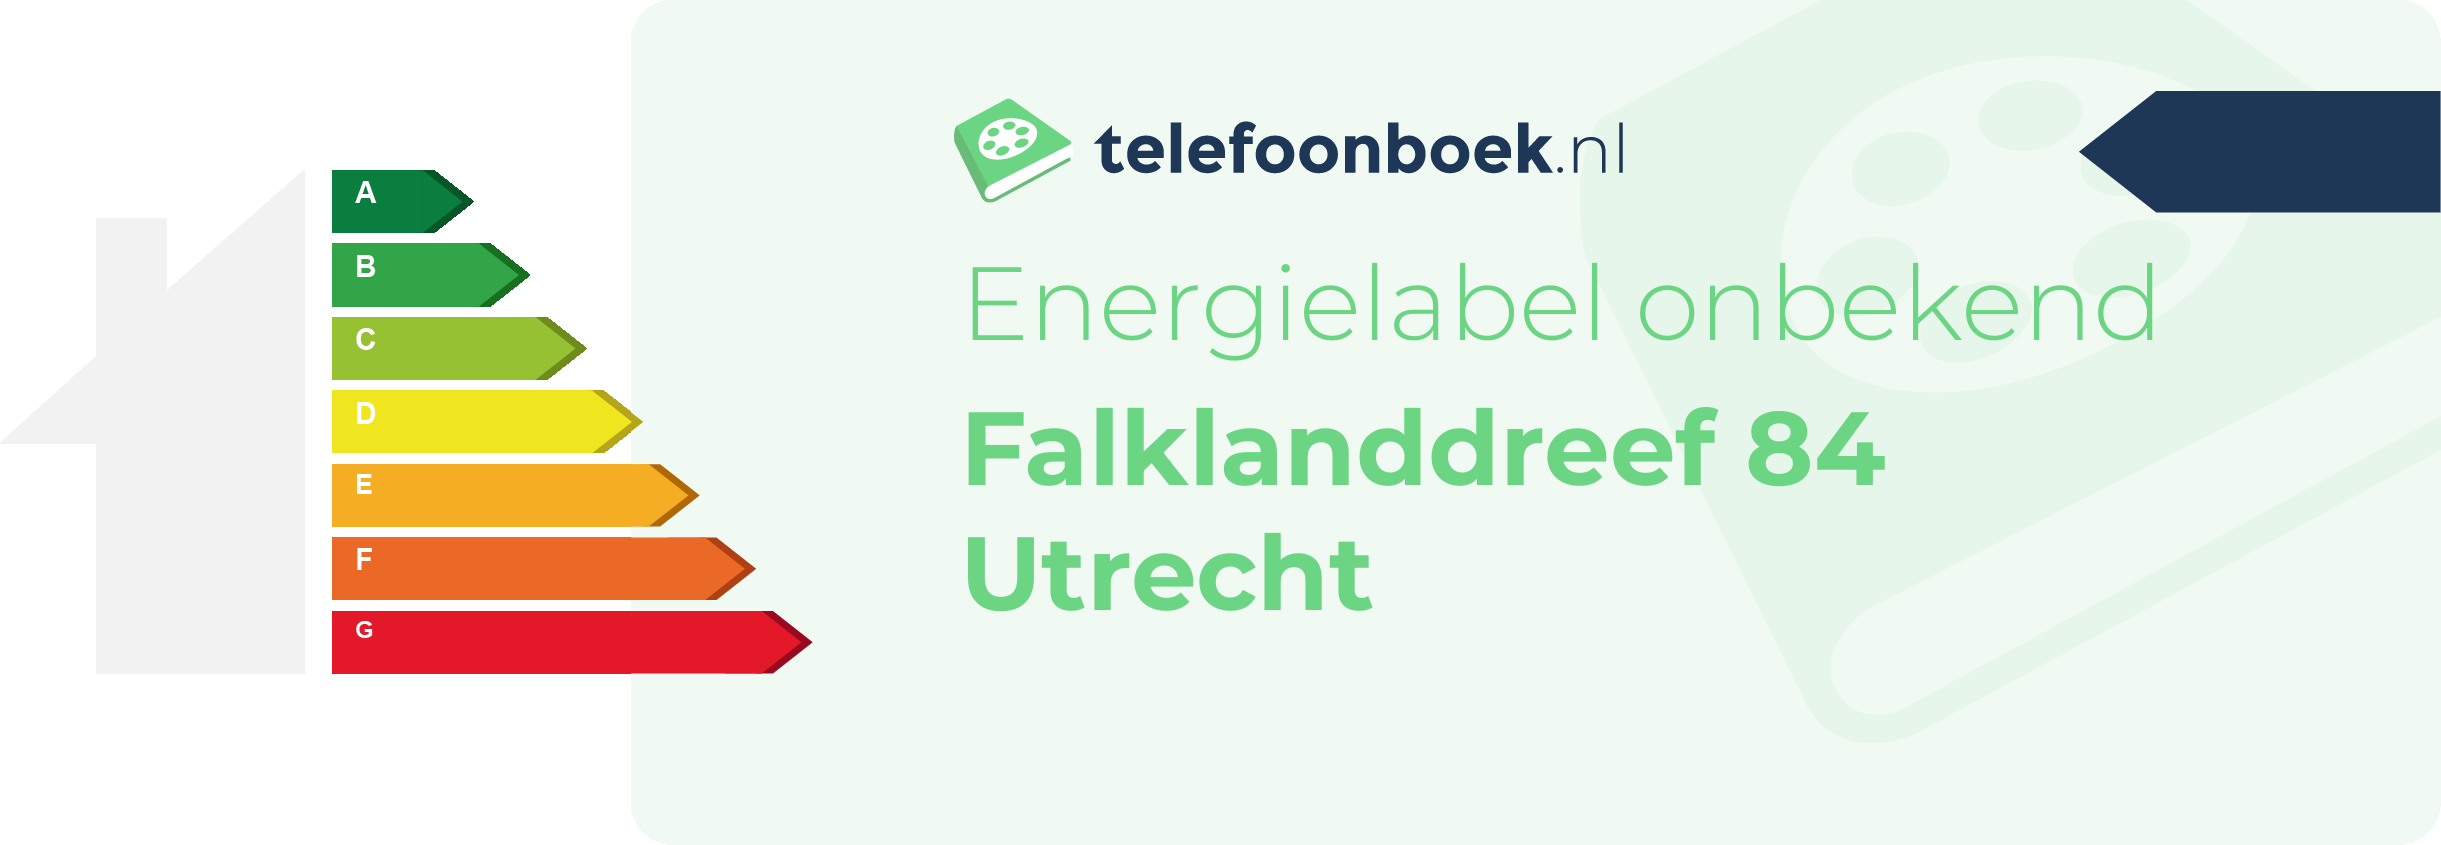 Energielabel Falklanddreef 84 Utrecht